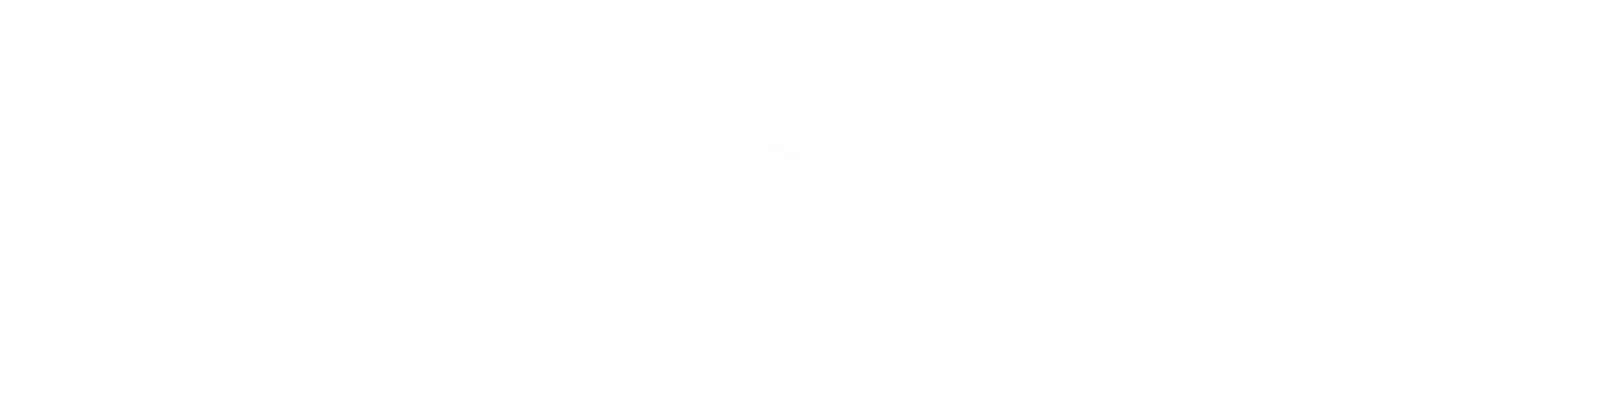 Pondok Tahfidz Al-Qur’an Al-Fatah Ciampea